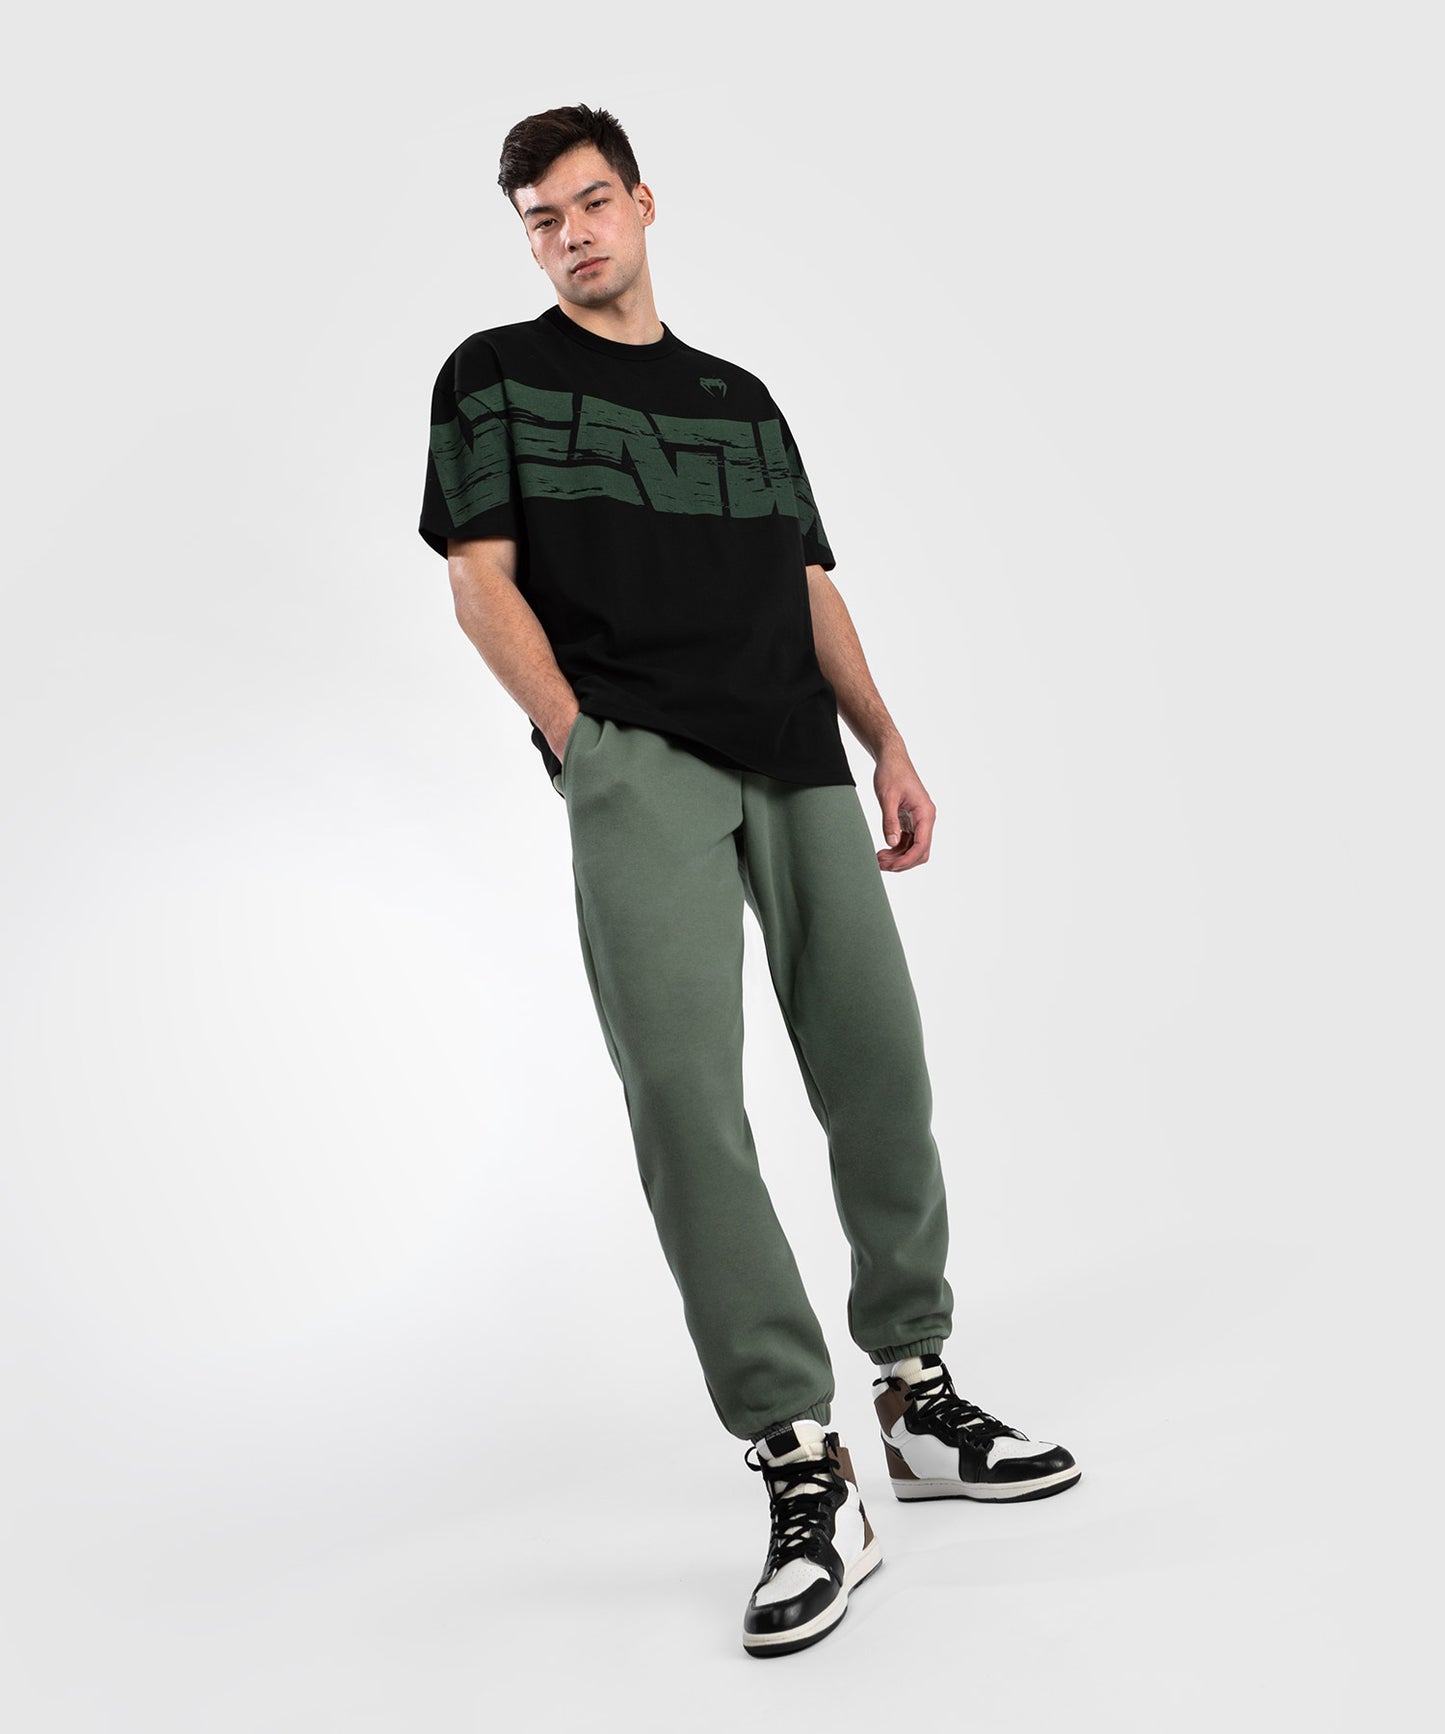 Venum Connect XL T-shirt - Black/Green